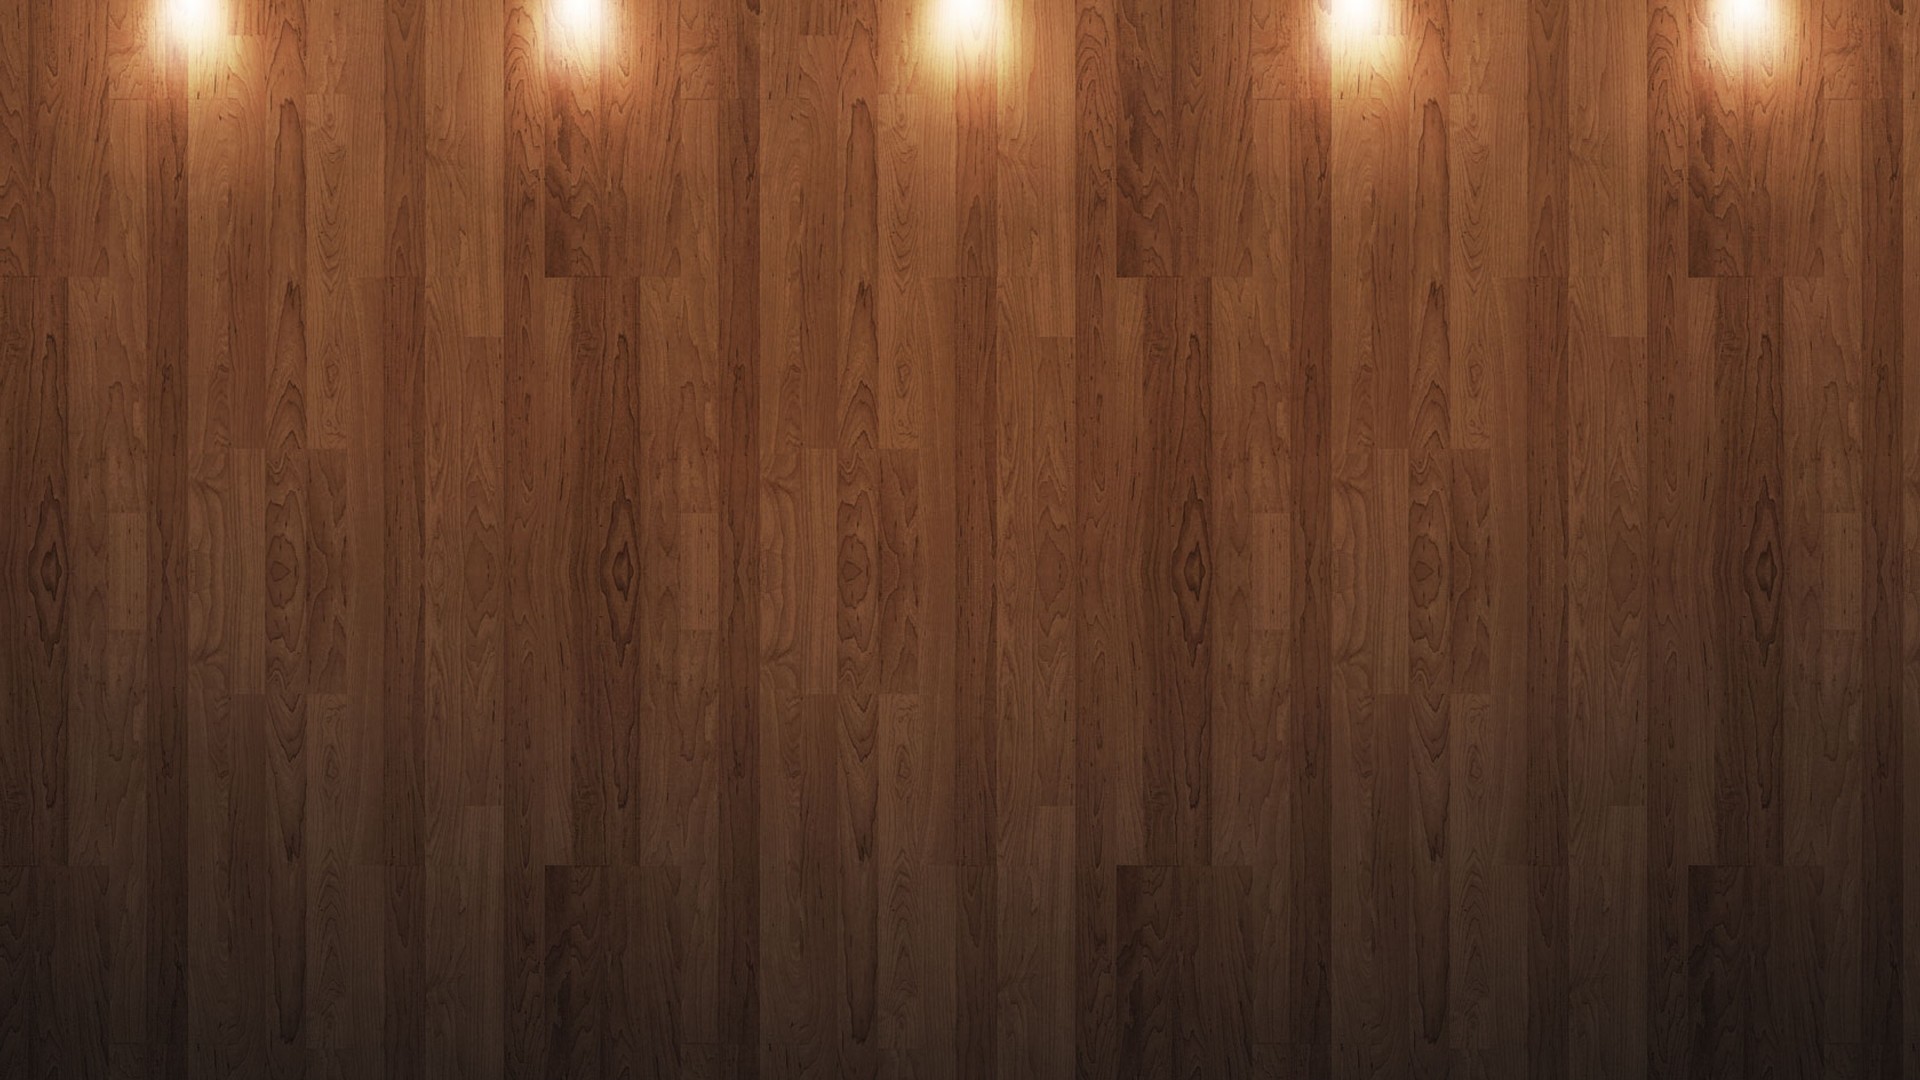 1920x1080 ... Wood Floor Background Tumblr